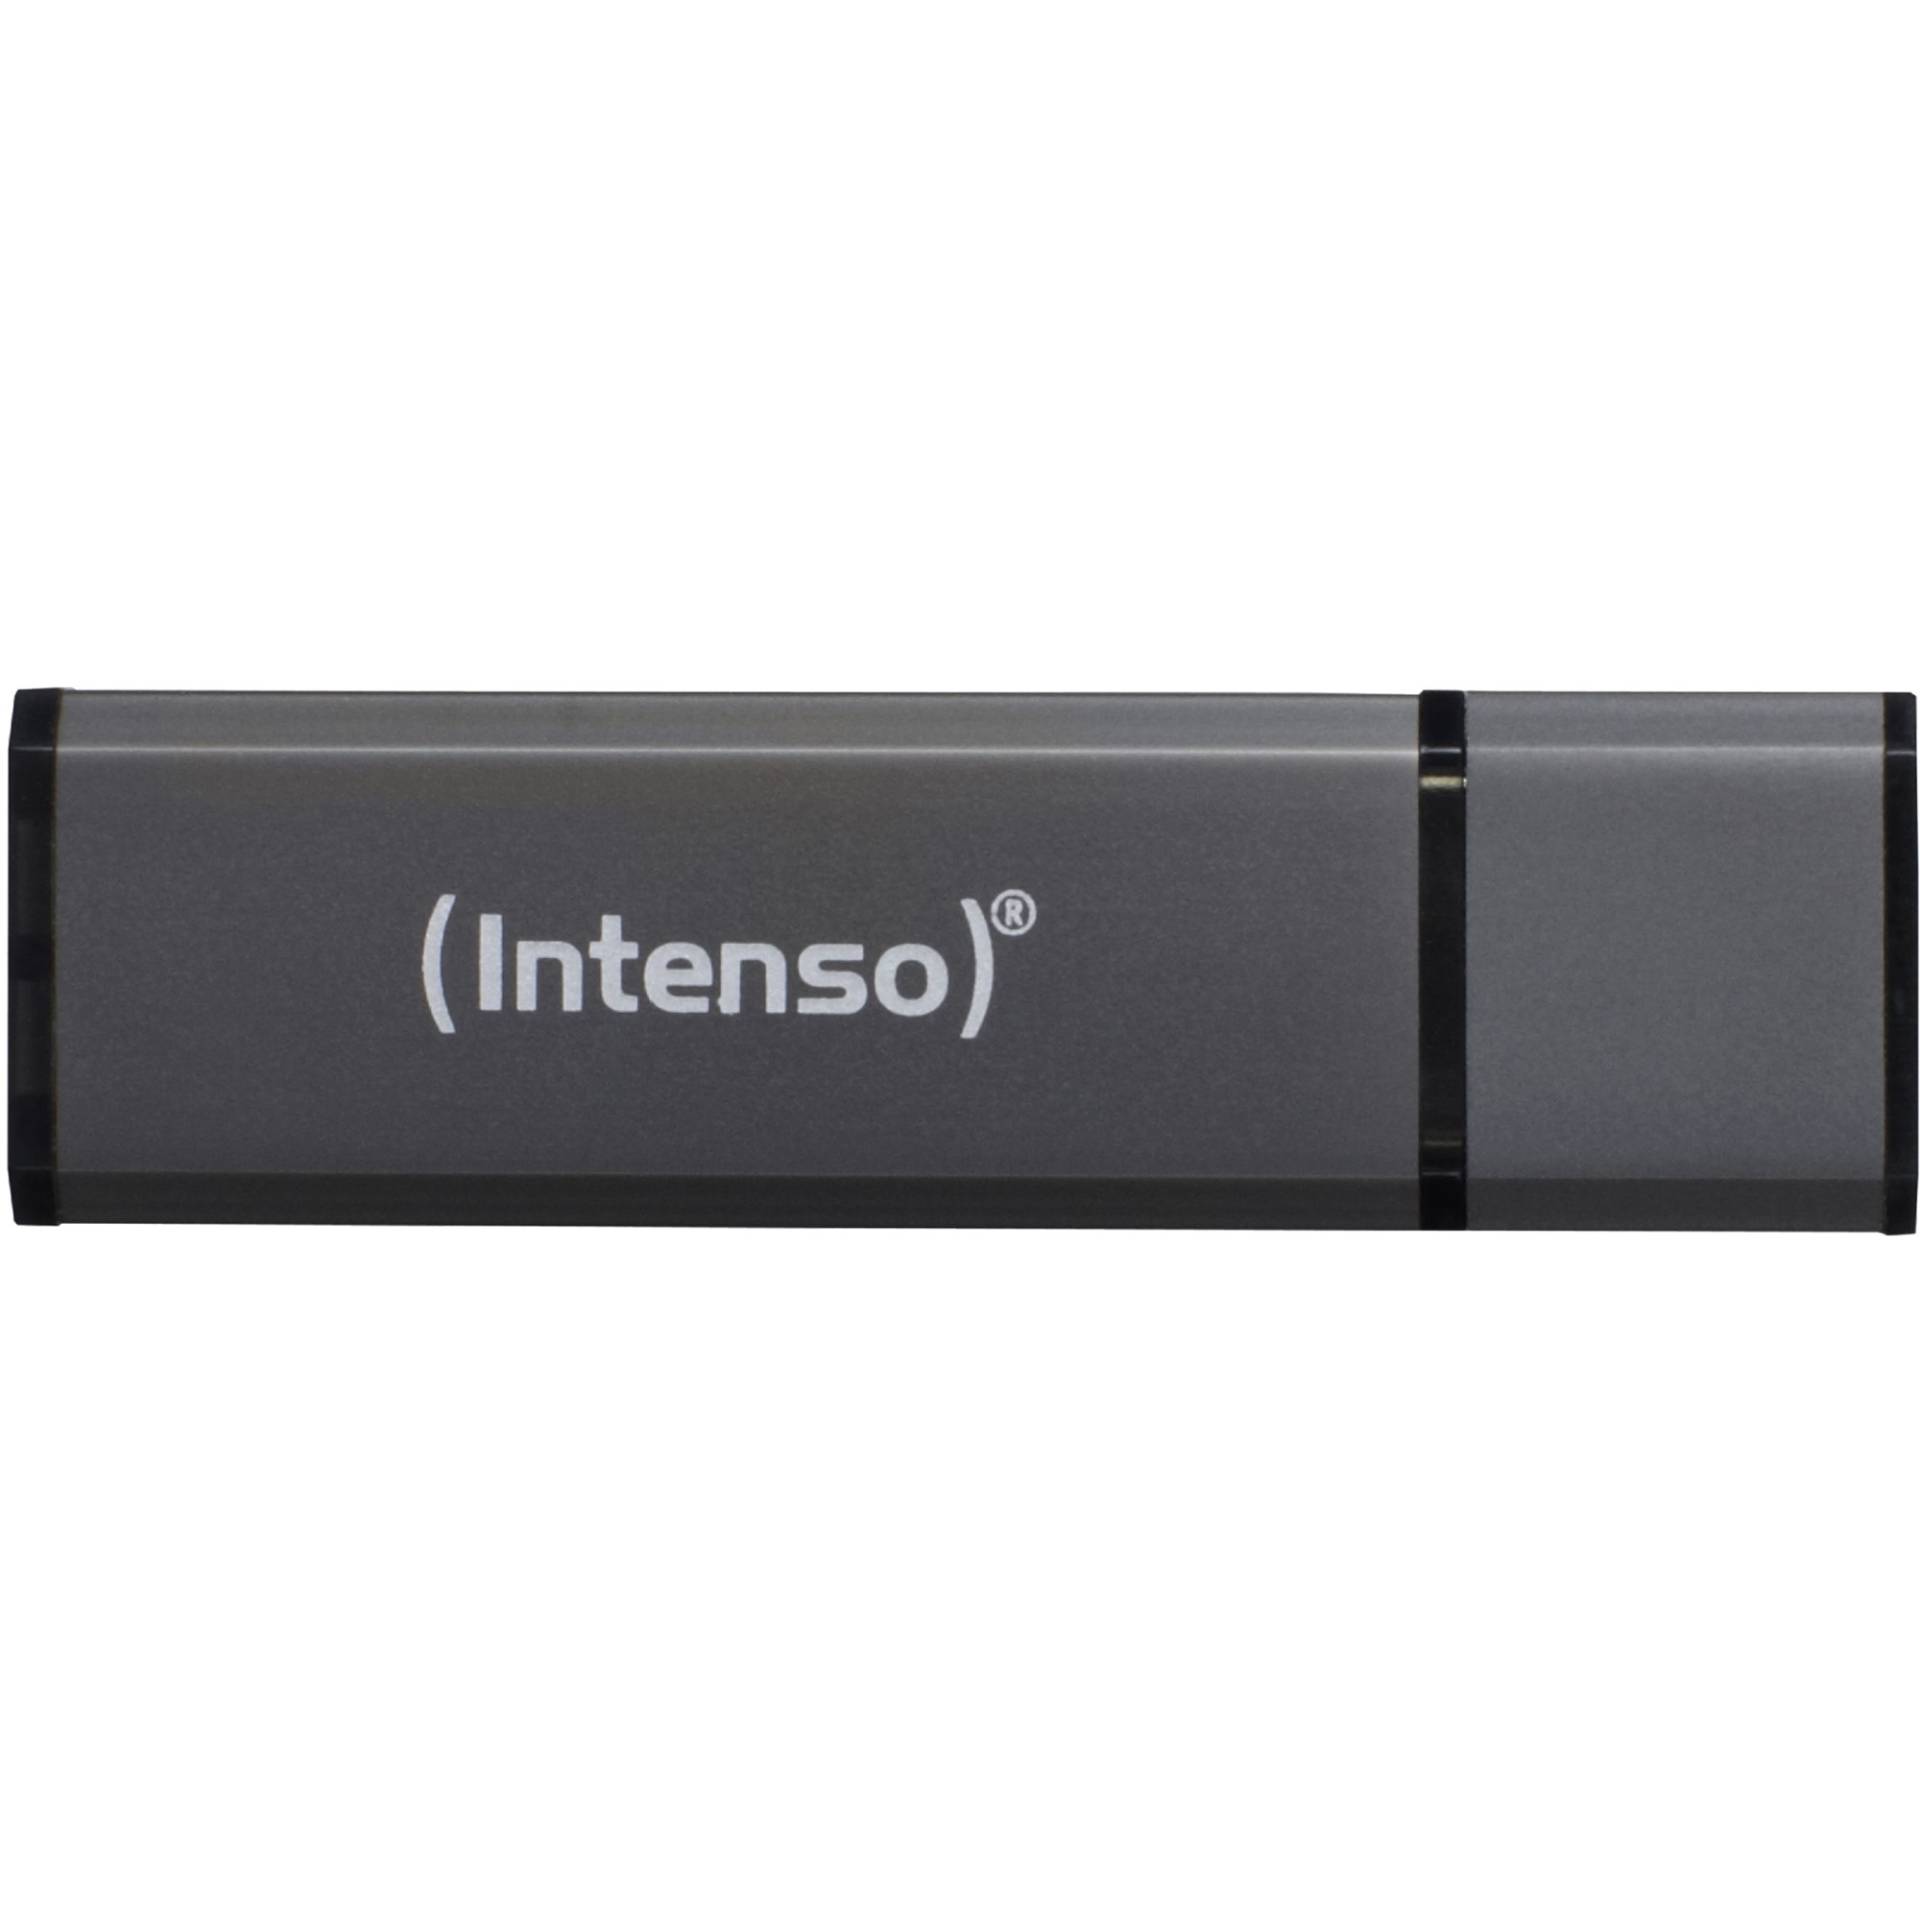 Alu Line 8 GB, USB-Stick von Intenso